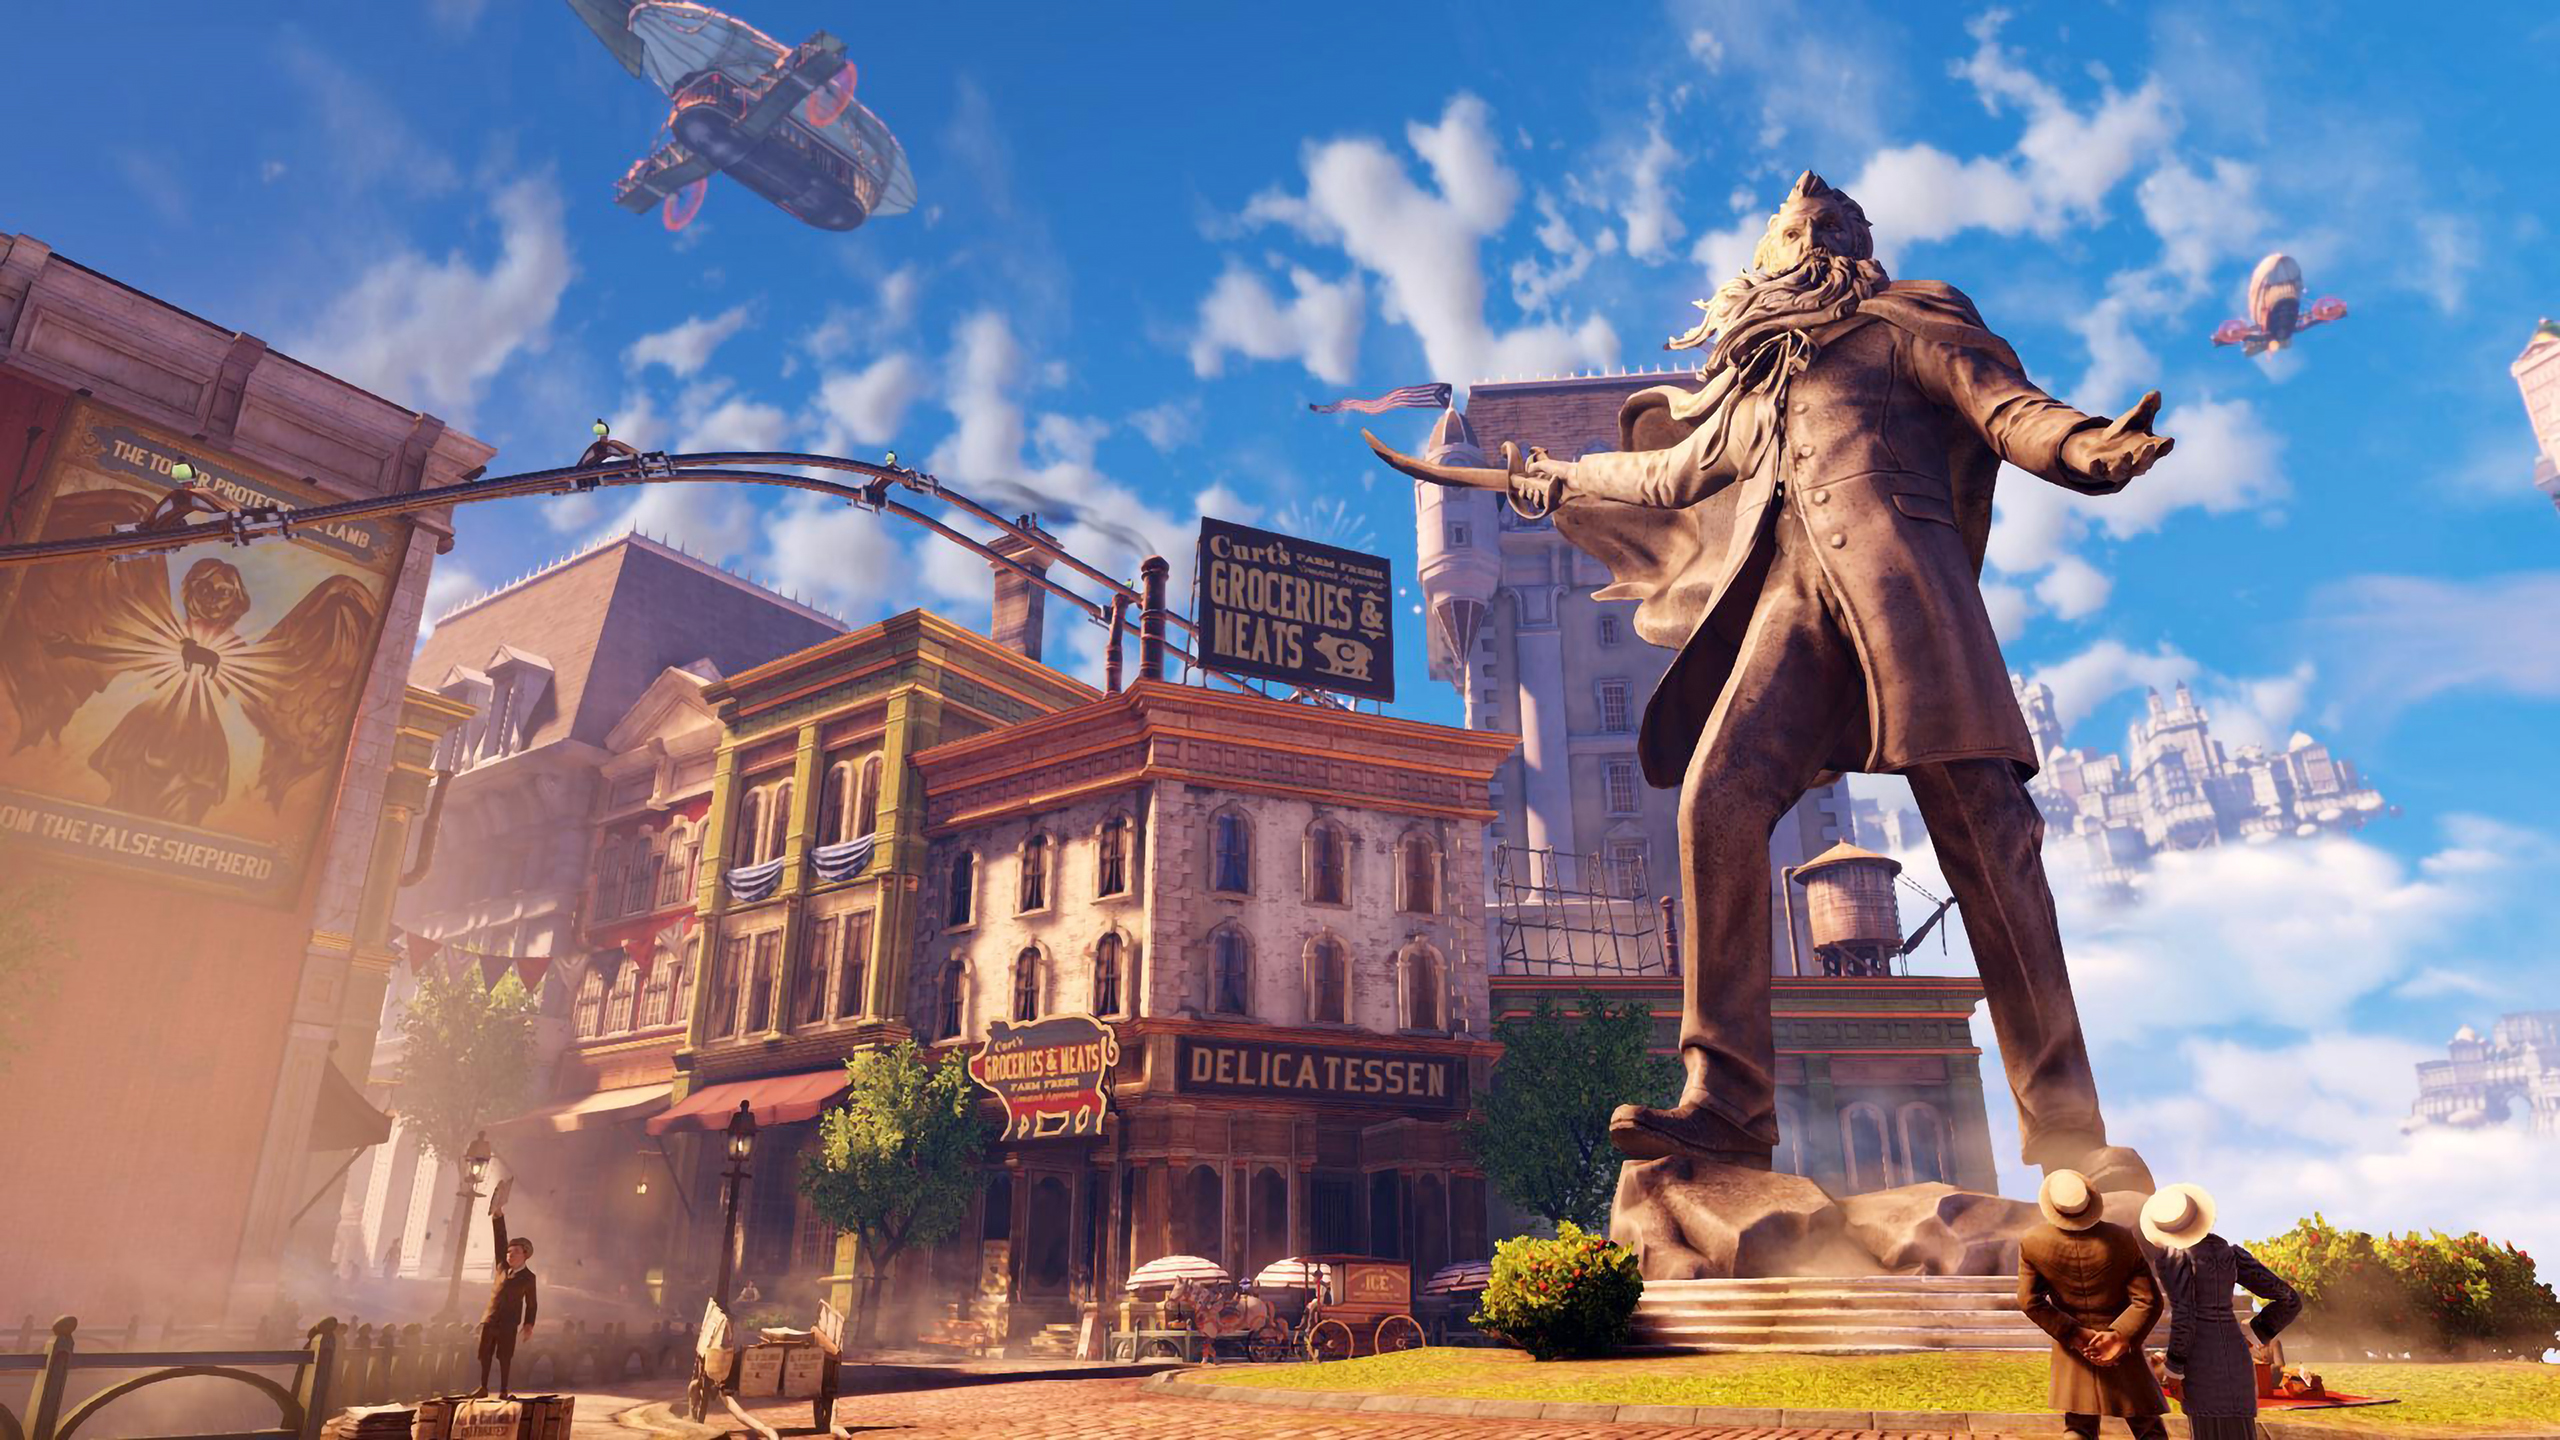 General 2560x1440 BioShock Infinite statue video game art airships sky clouds building video game characters CGI video games billboards